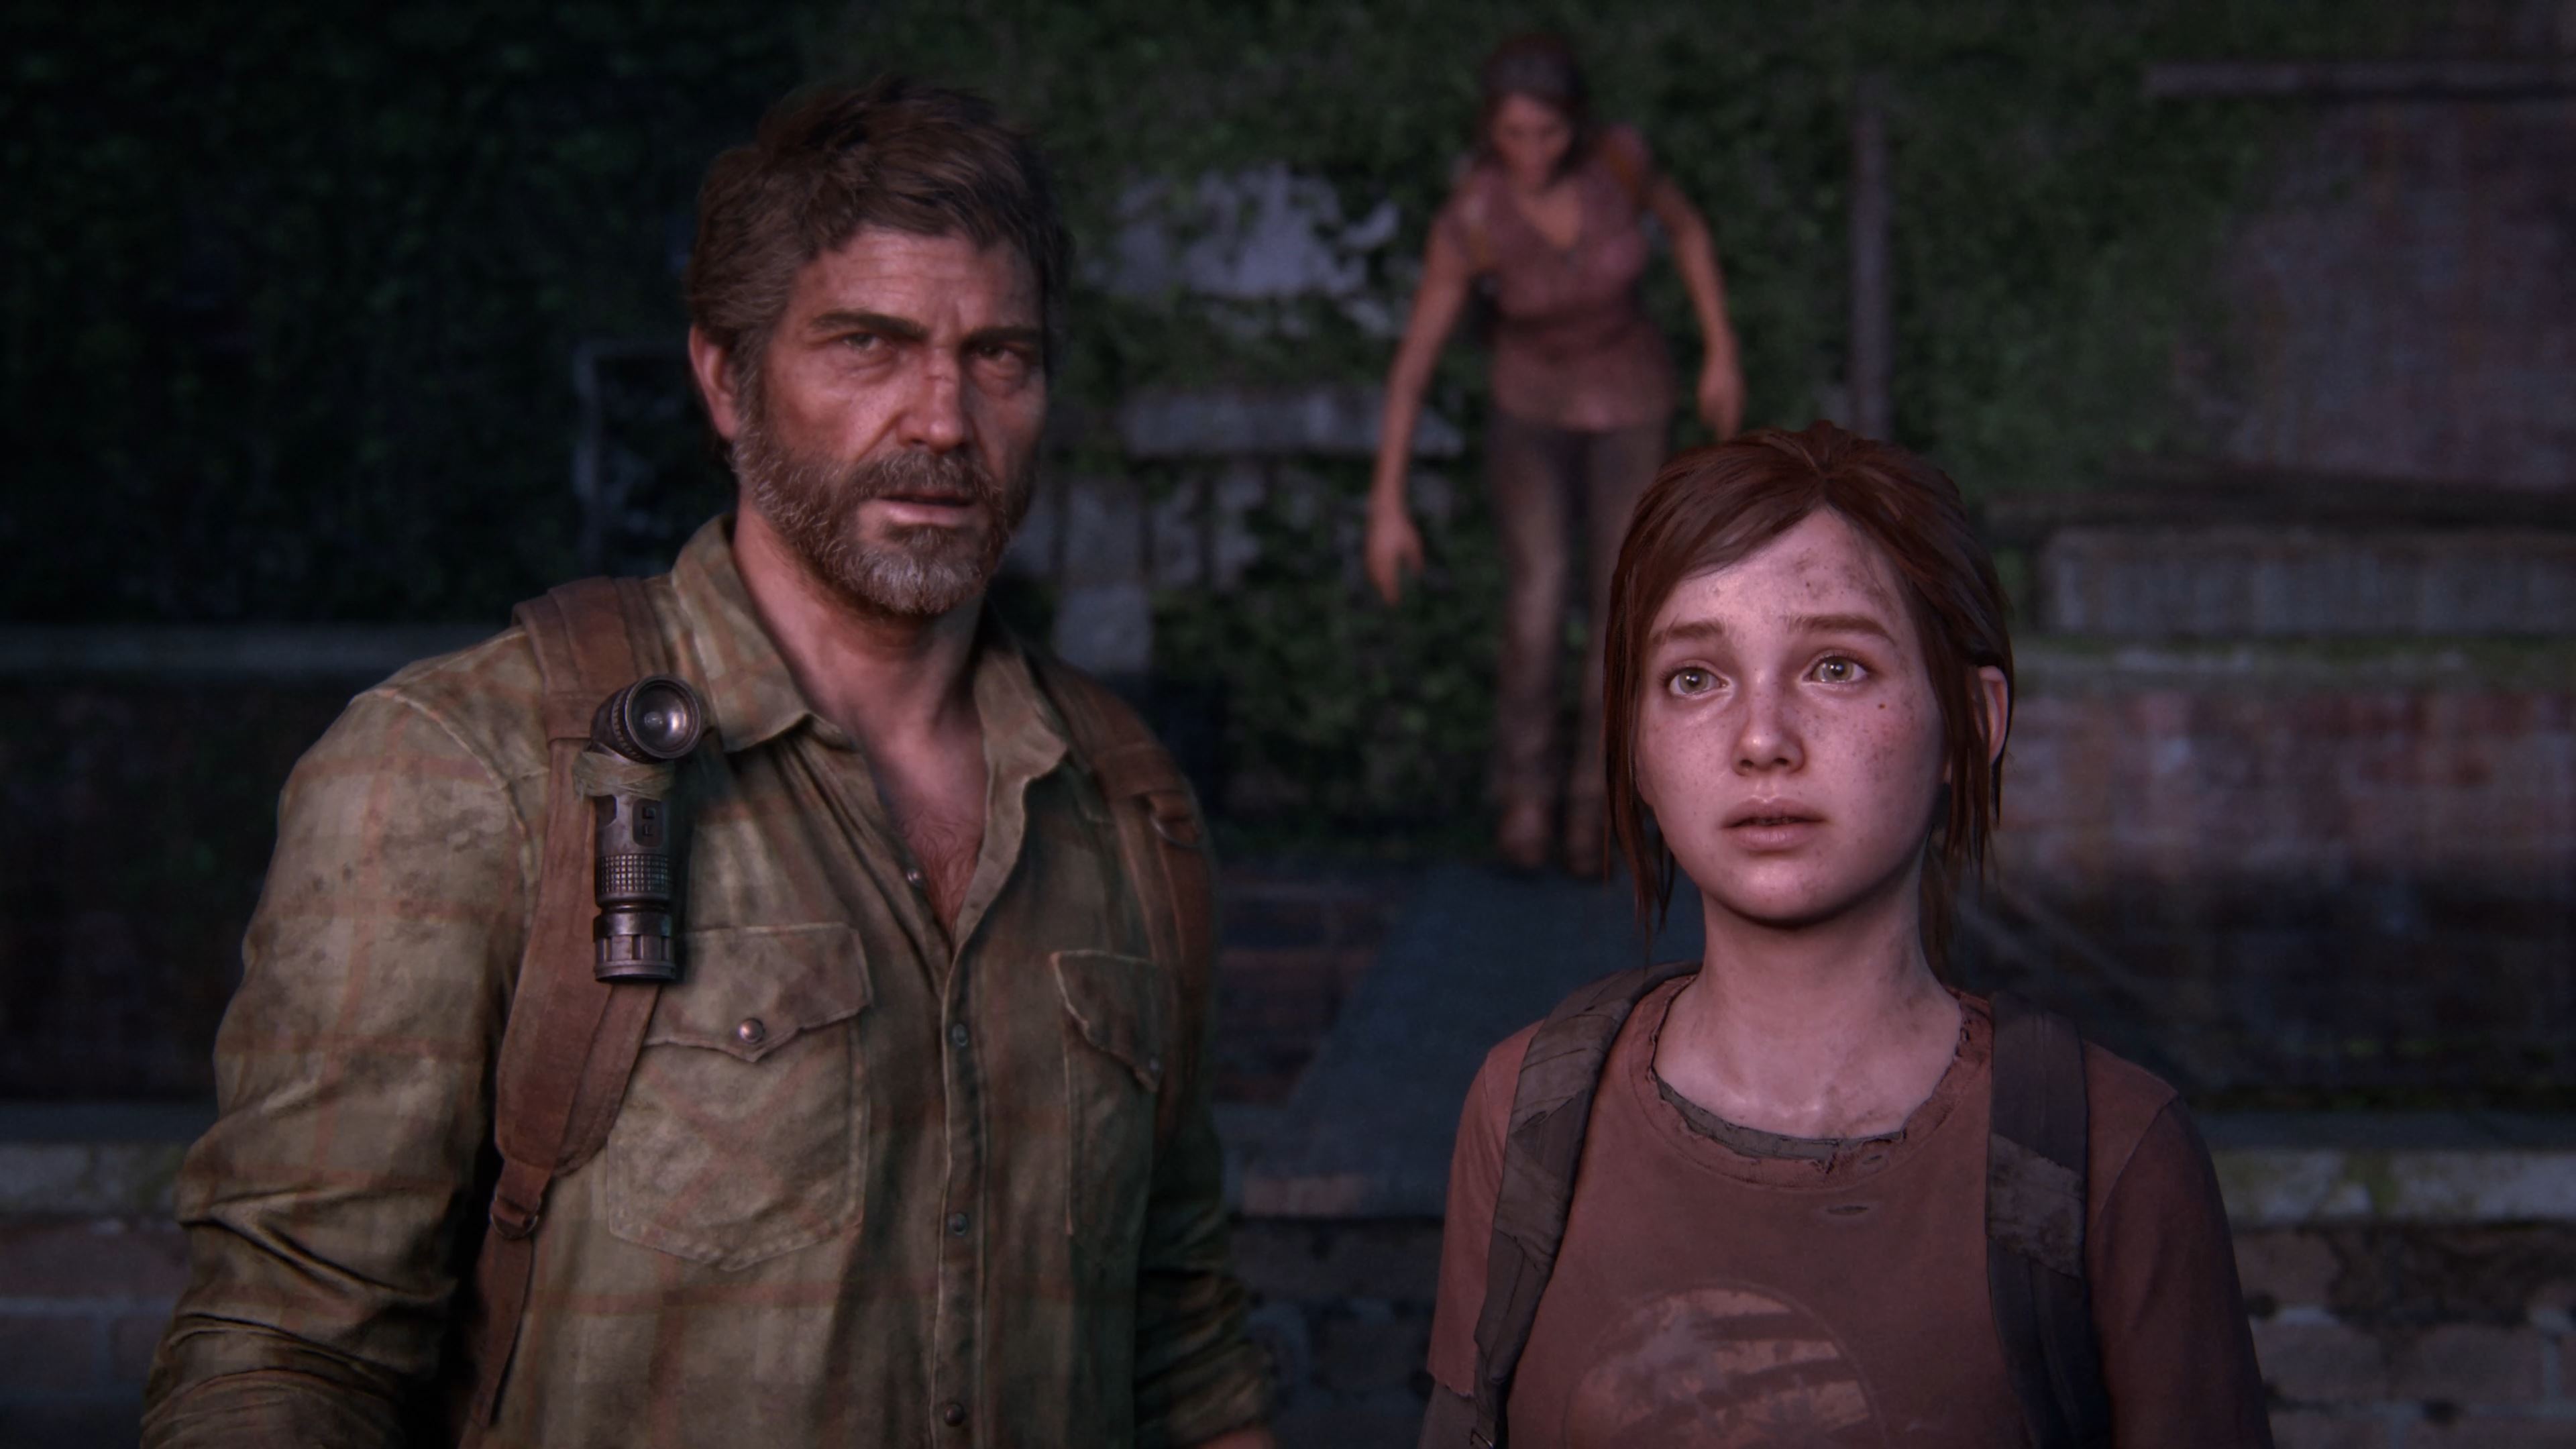 The Last of Us” creator Neil Druckmann on the series' success